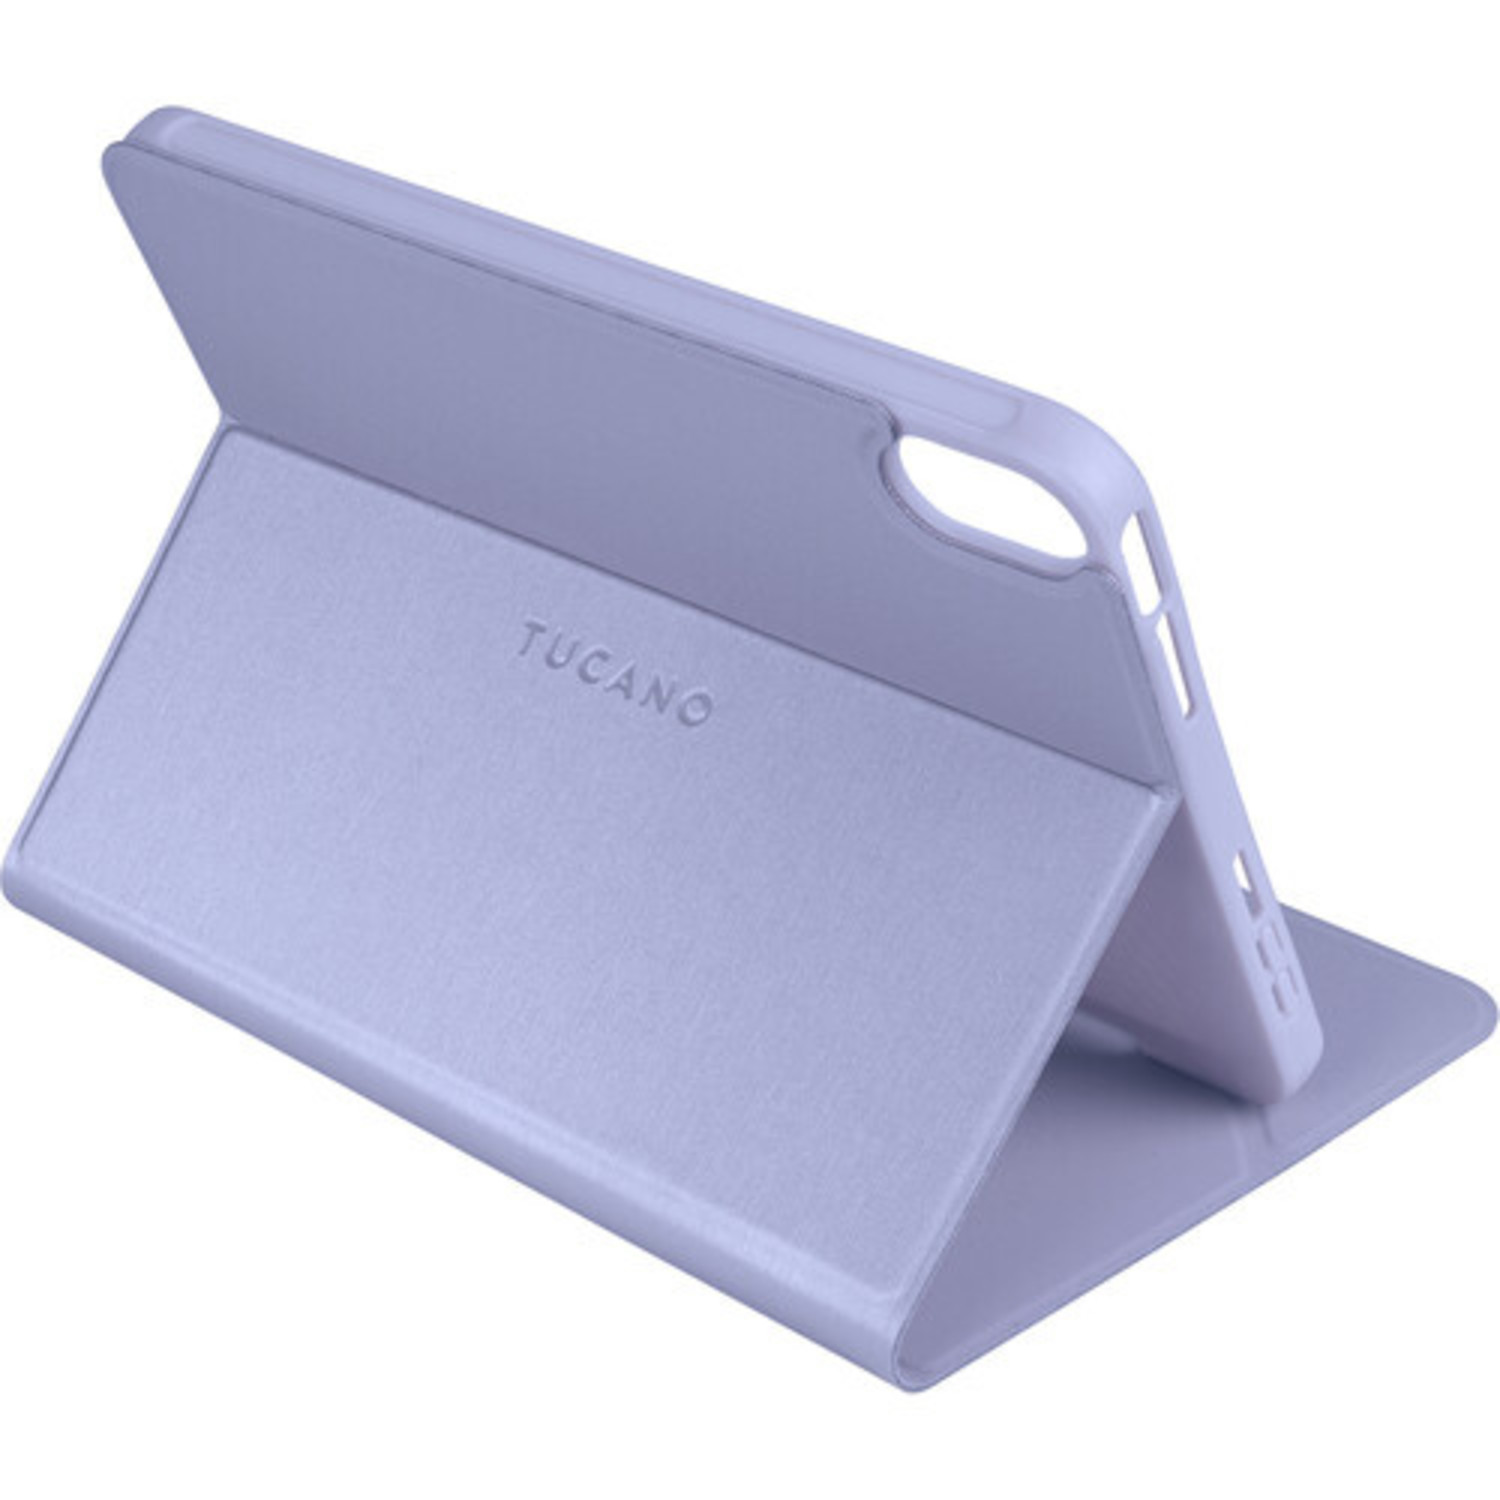 Metal Folio Case for iPad mini 6th gen - Purple - Campus Computer Store